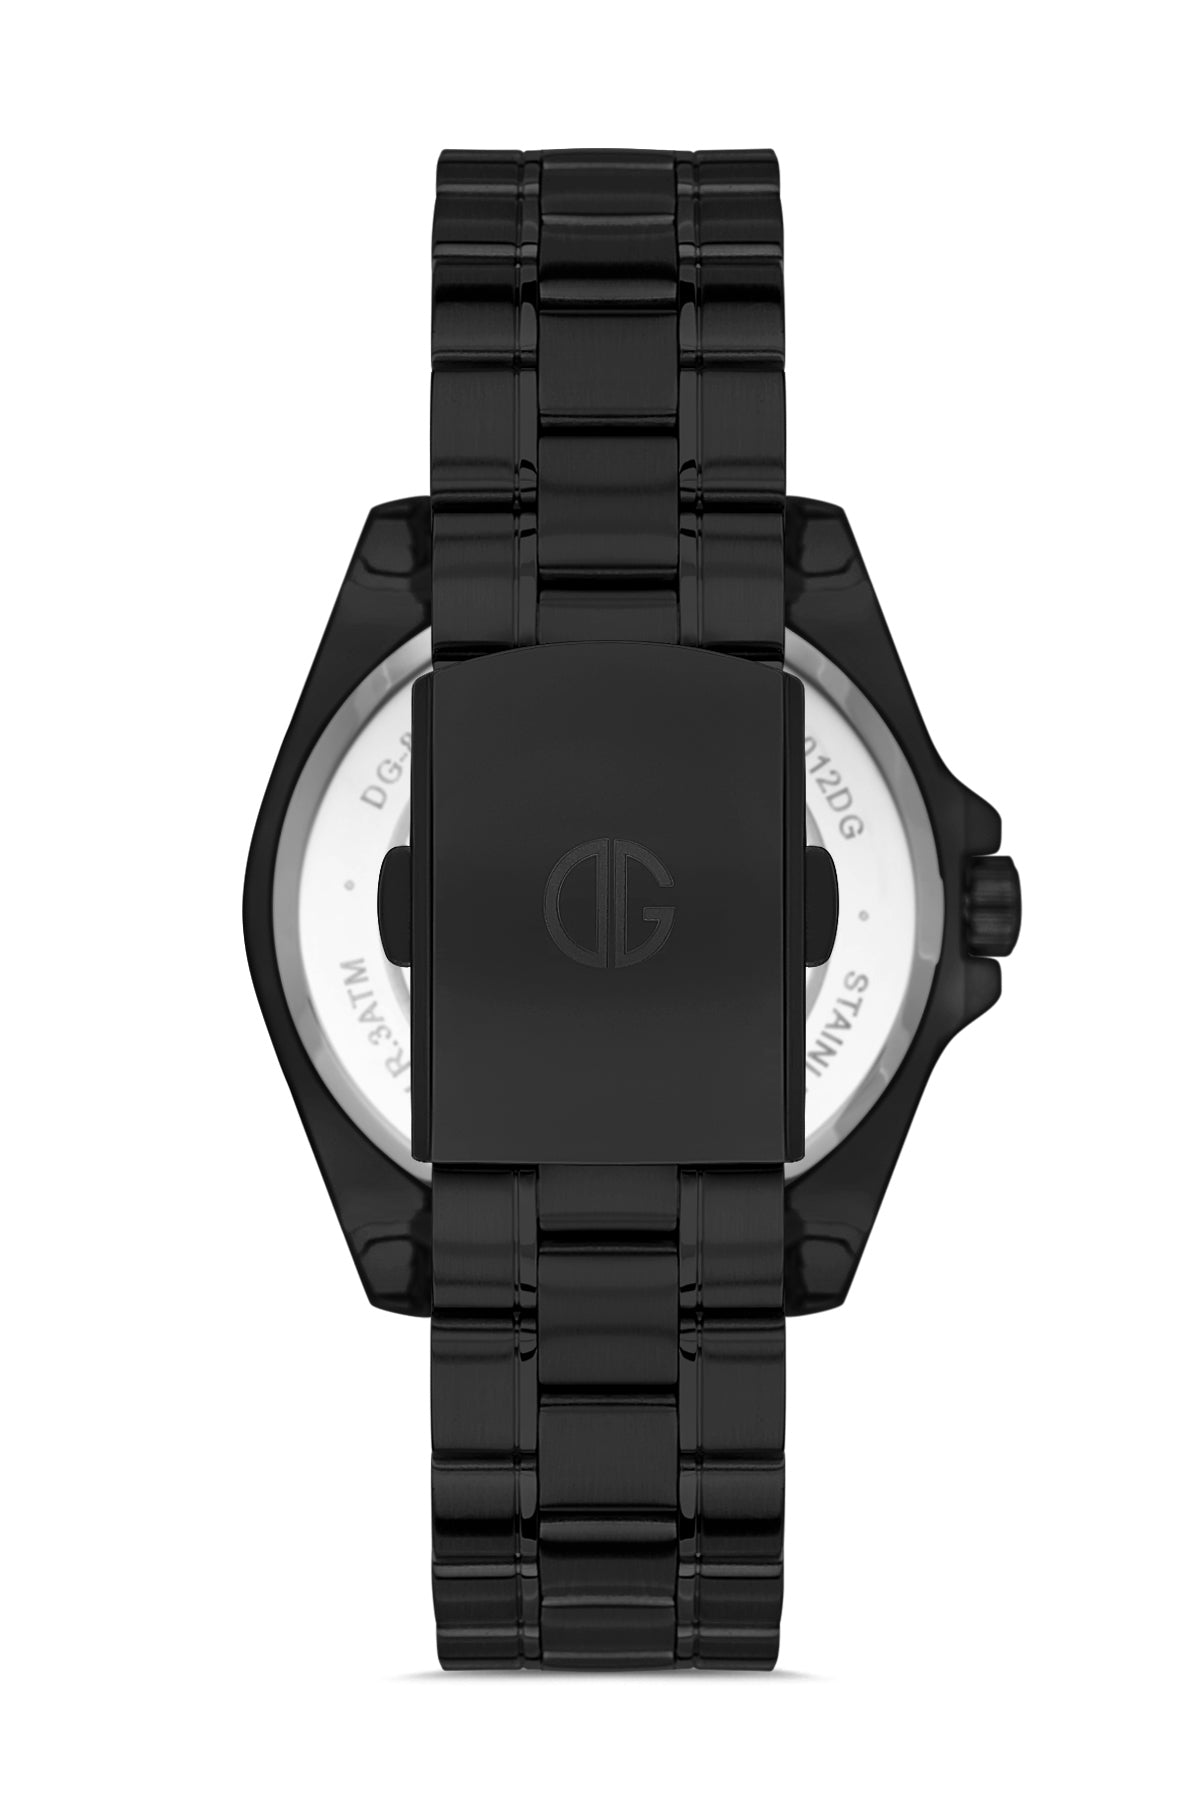 DAVID GUNER Men's Wristwatch with Black Dial and Black Coating Calendar